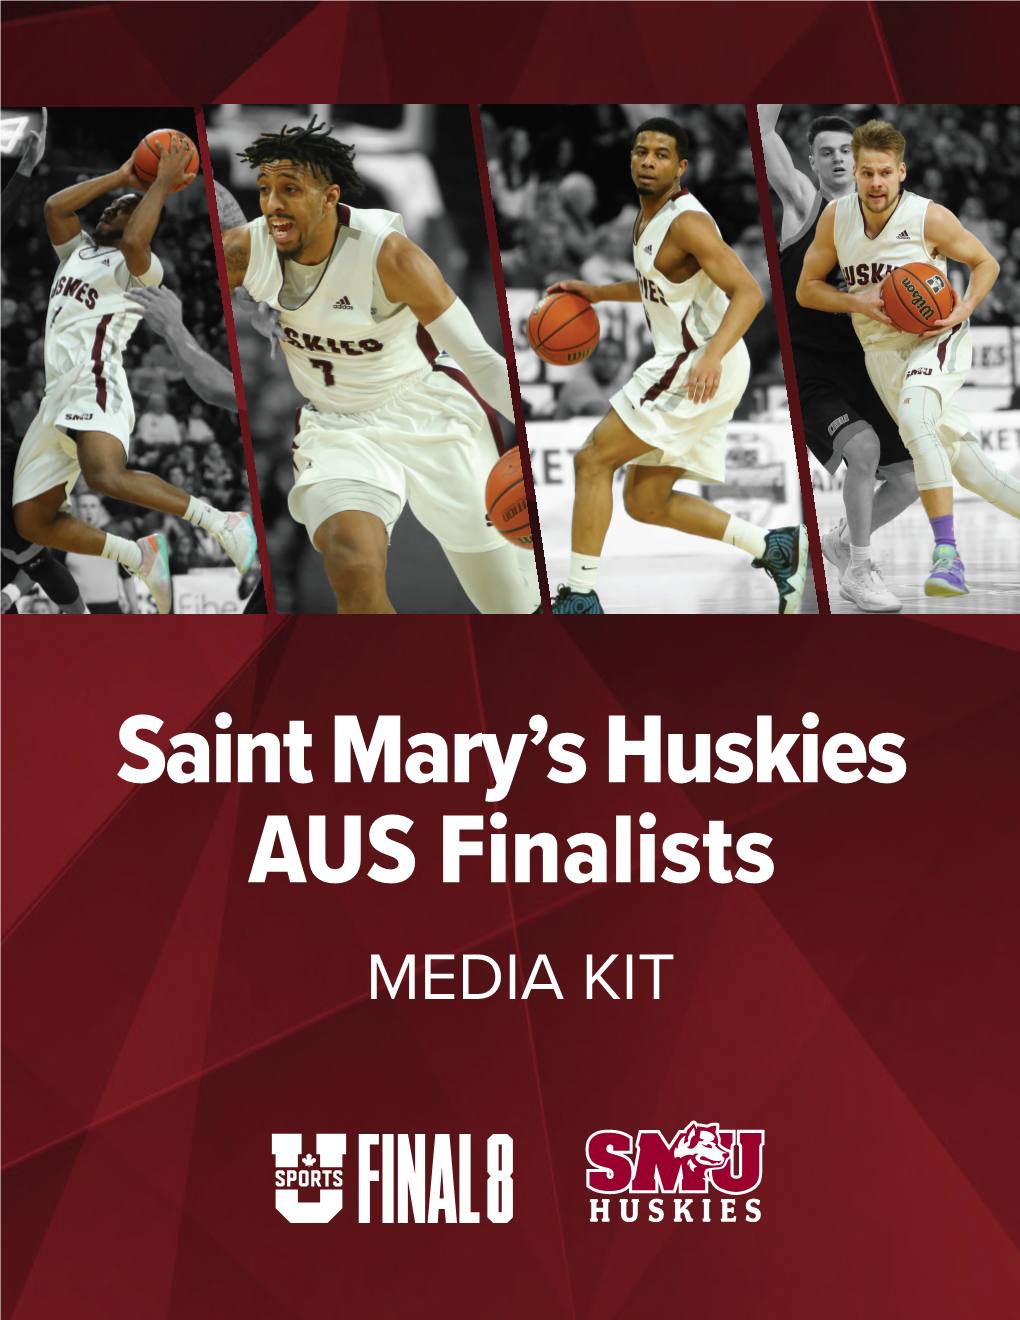 Saint Mary's Huskies AUS Finalists